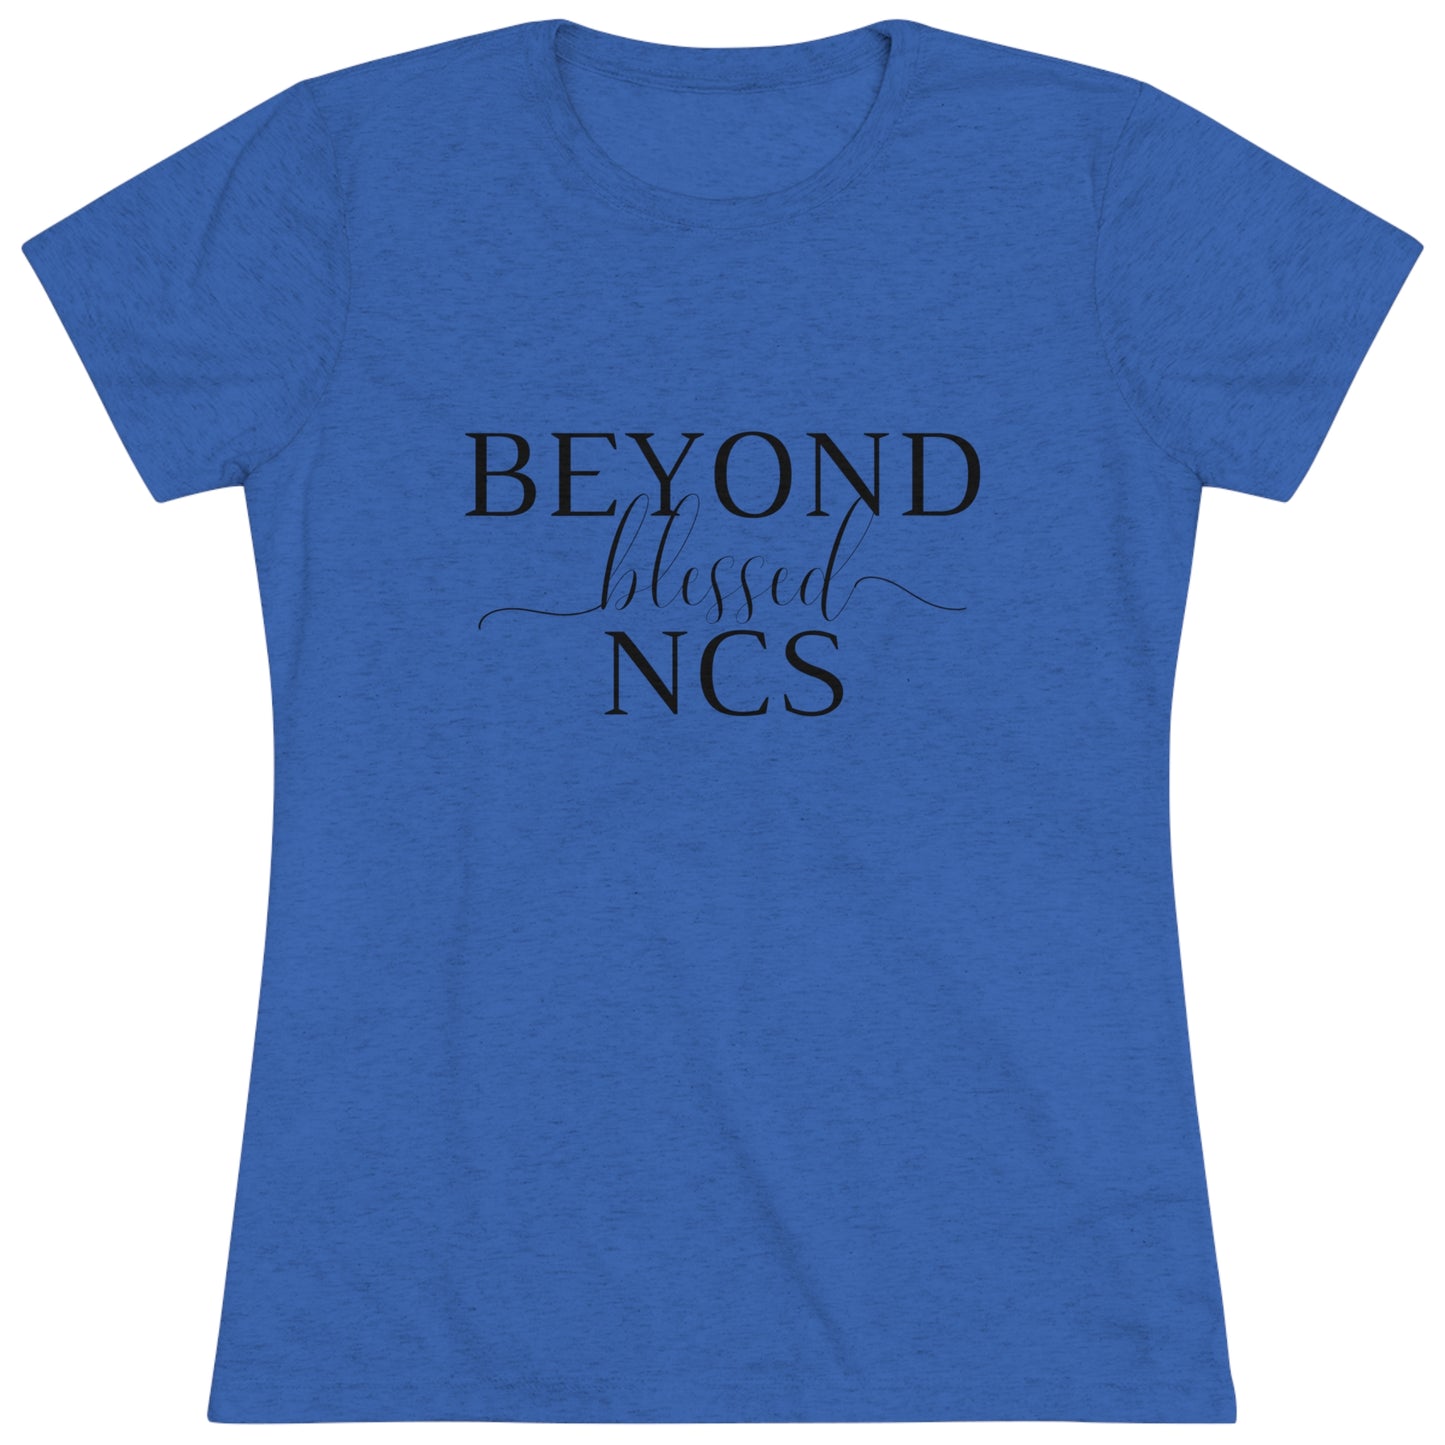 Beyond Blessed NCS - Women's Triblend Tee - Black